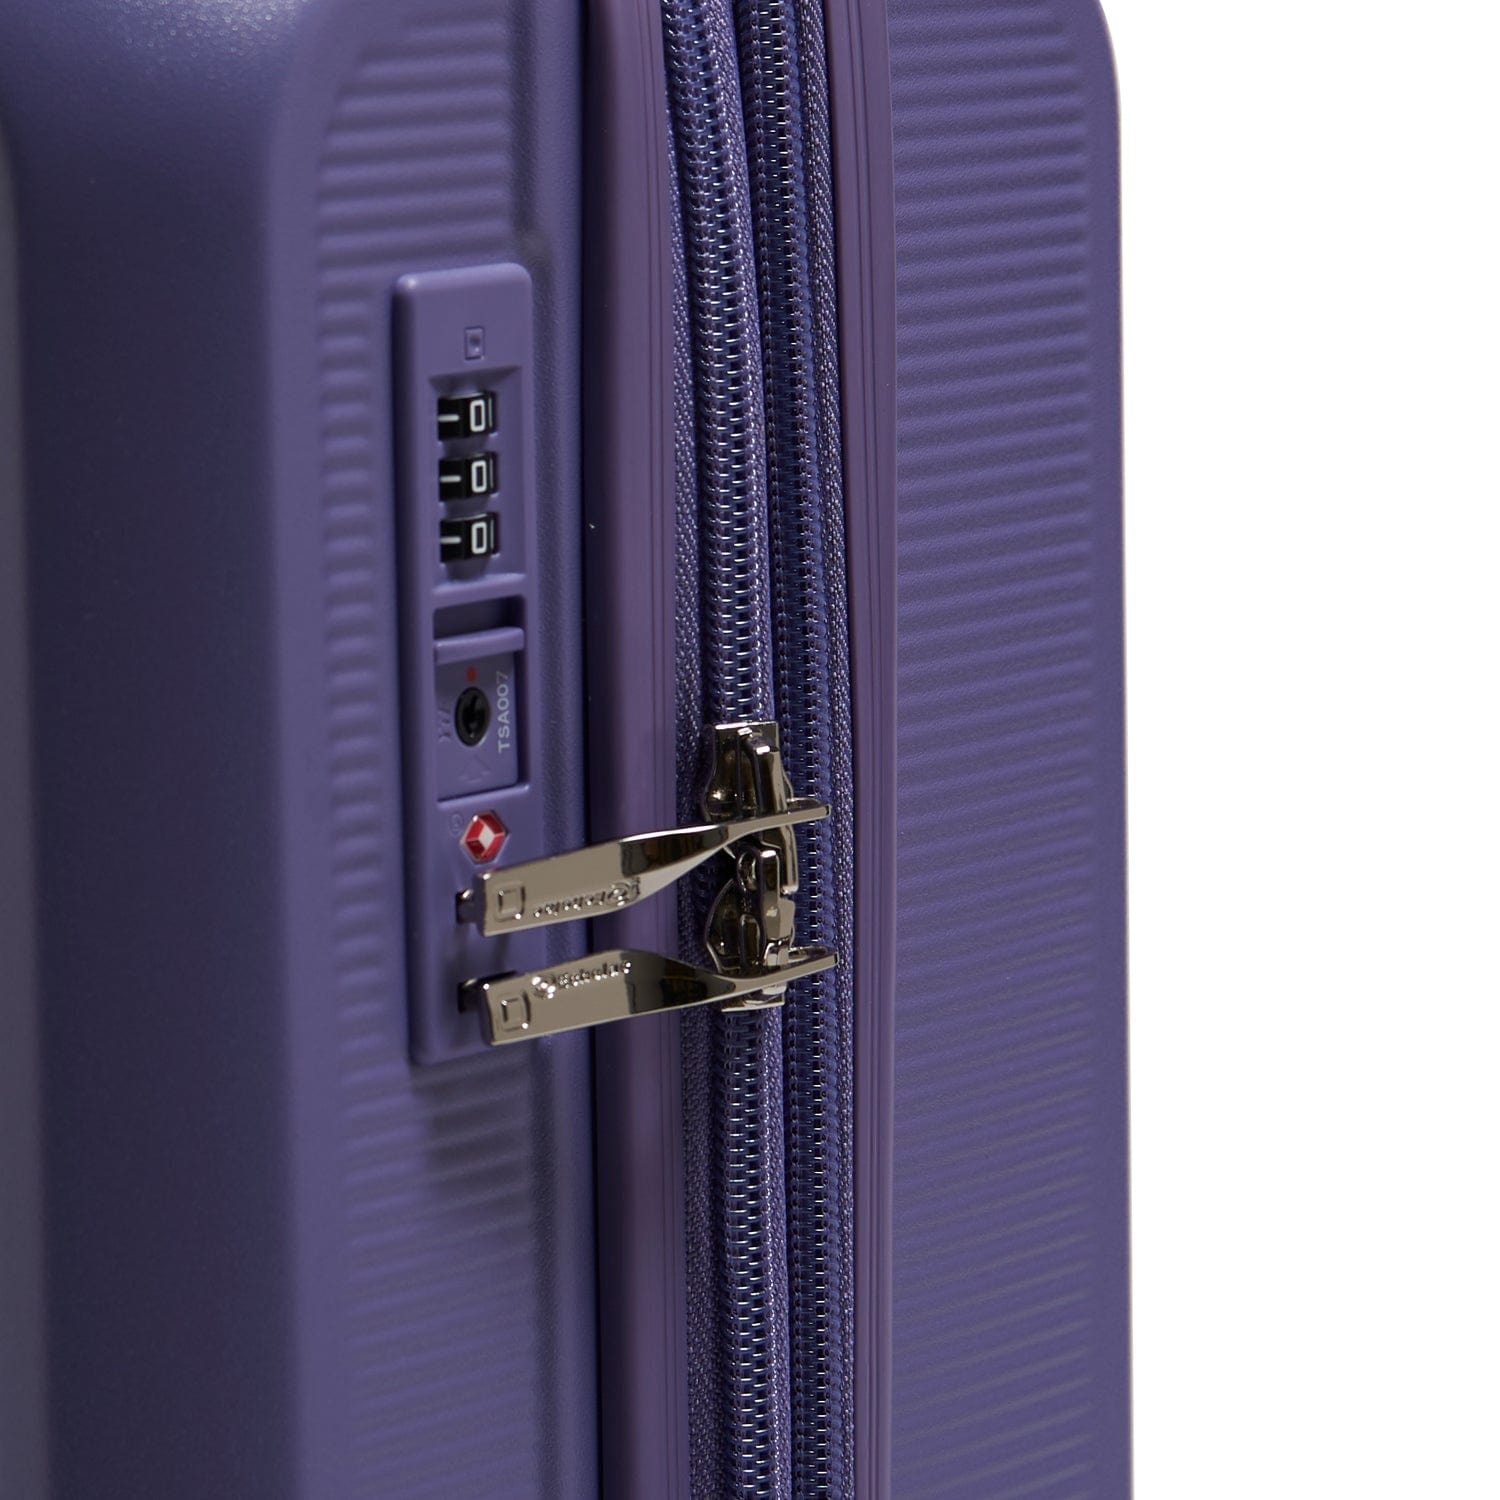 Echolac Sense 78cm Hardcase Expandable 4 Double Wheel Check-In Luggage Trolley Purple - CHT0023S -28 Purple